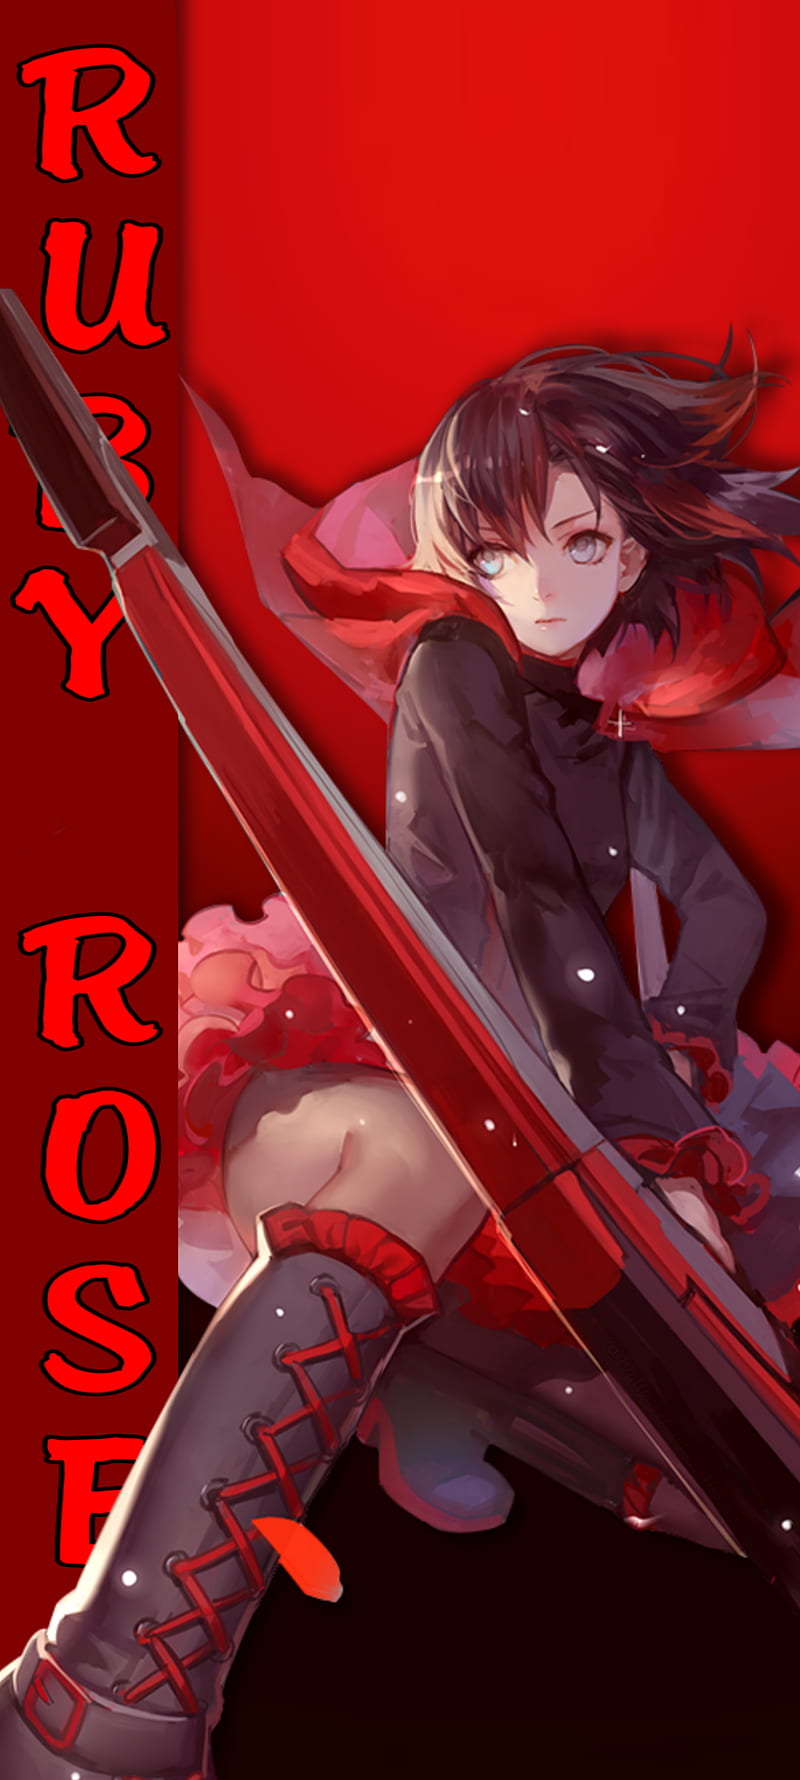 RWBY - Ruby Rose (Anime) [Version 3] by DeadGumbler on DeviantArt